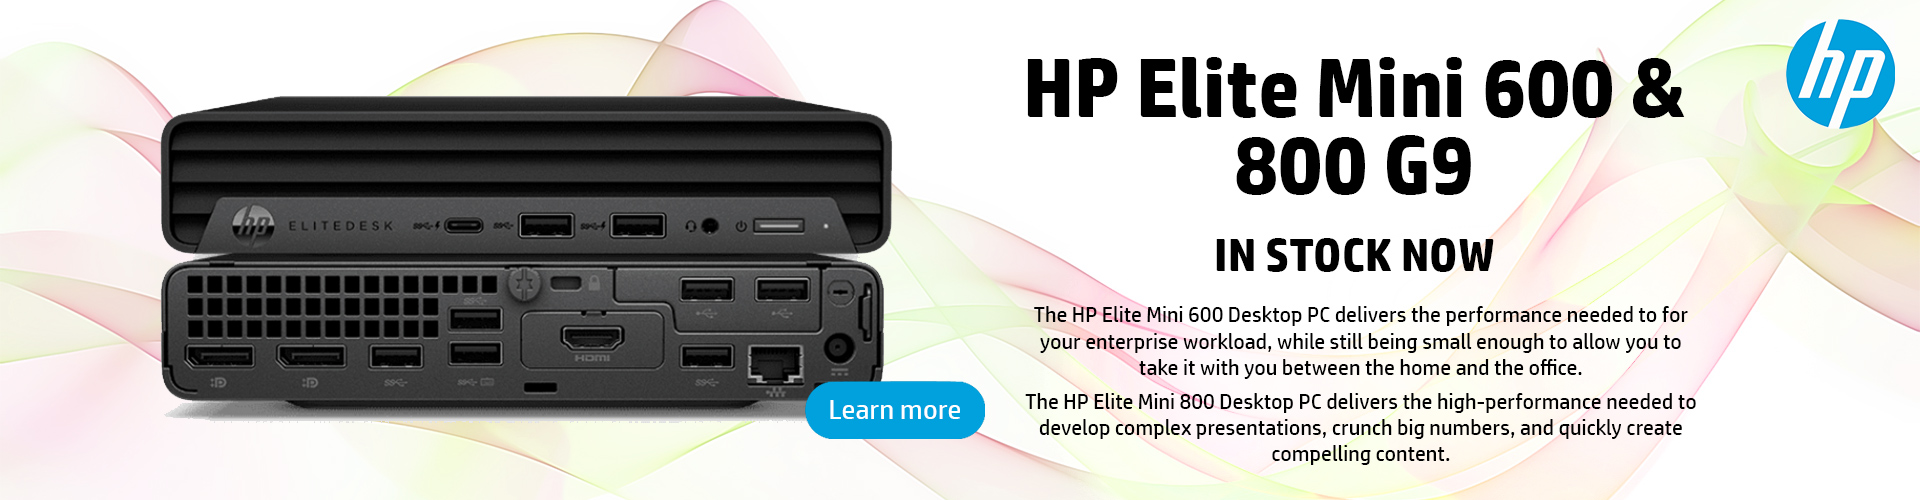 HP Elite Mini